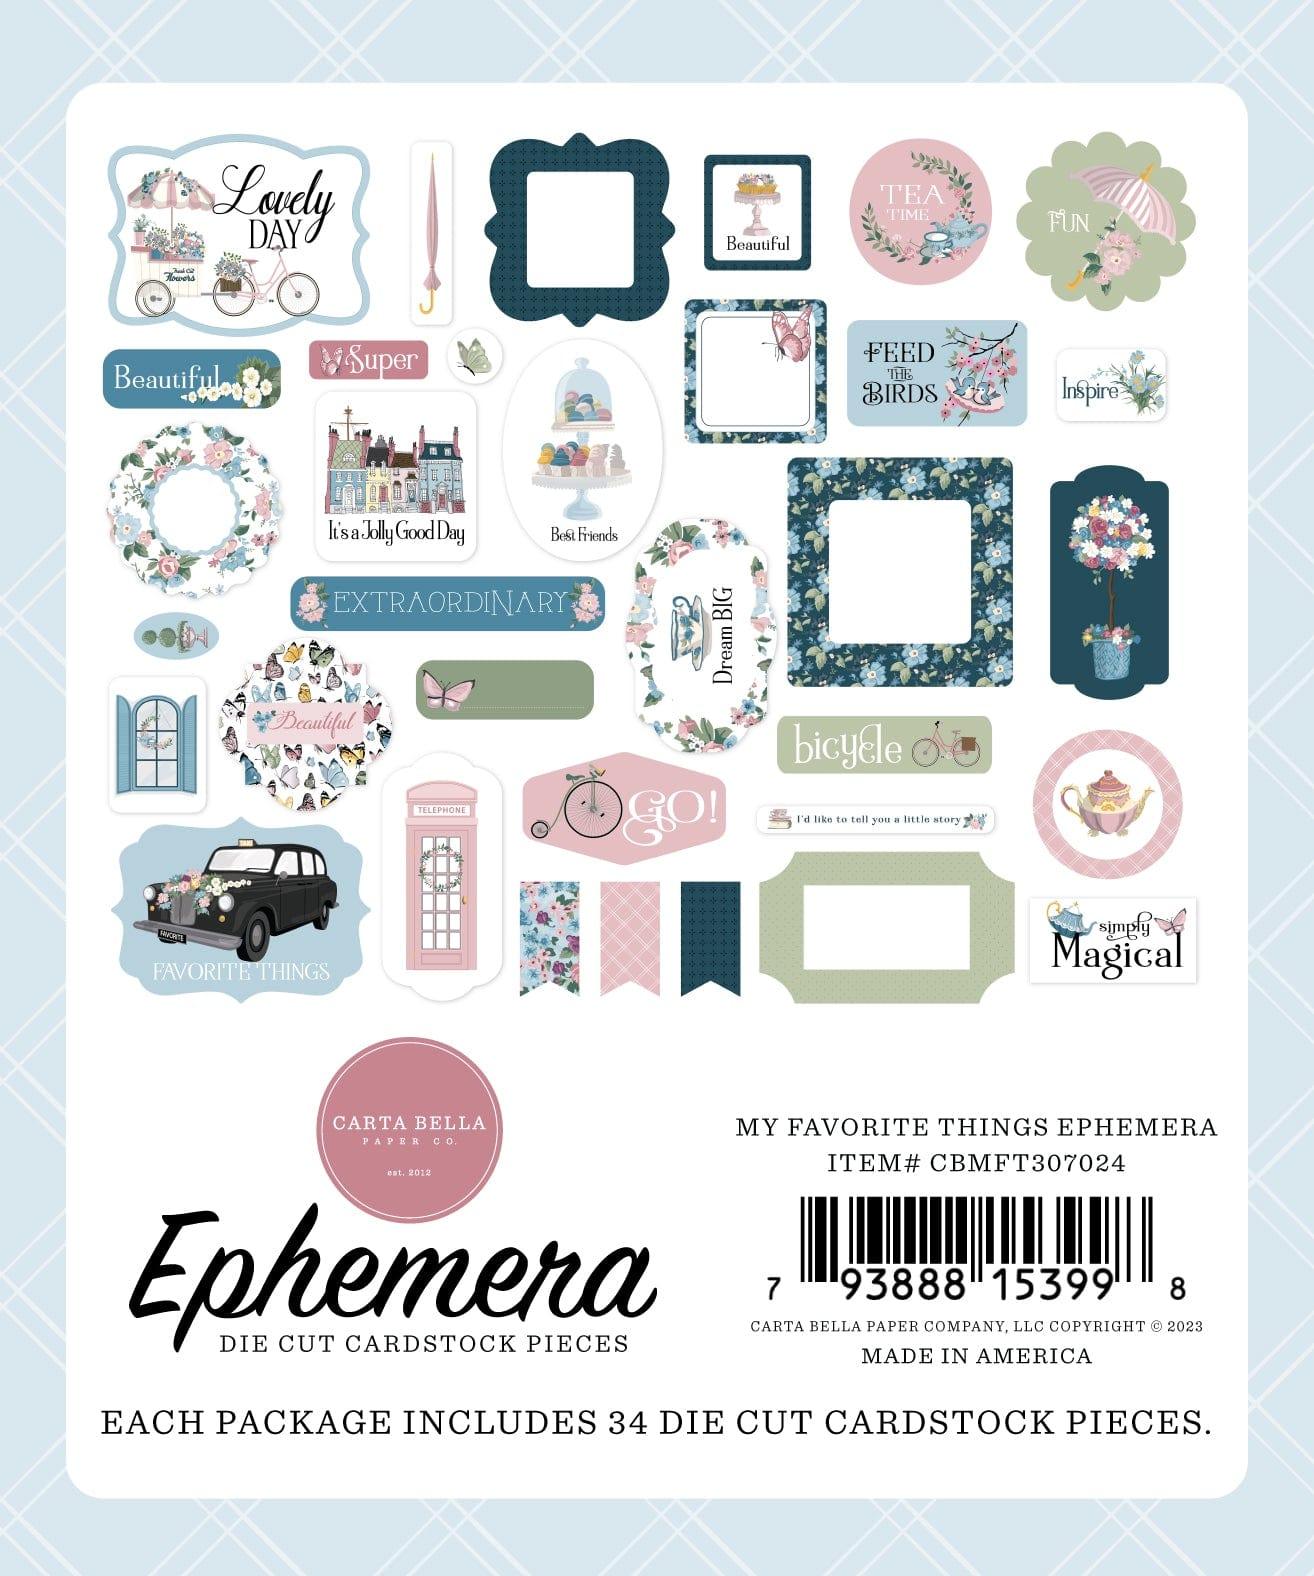 My Favorite Things Collection 5 x 5 Scrapbook Ephemera Die Cuts by Carta Bella - Scrapbook Supply Companies